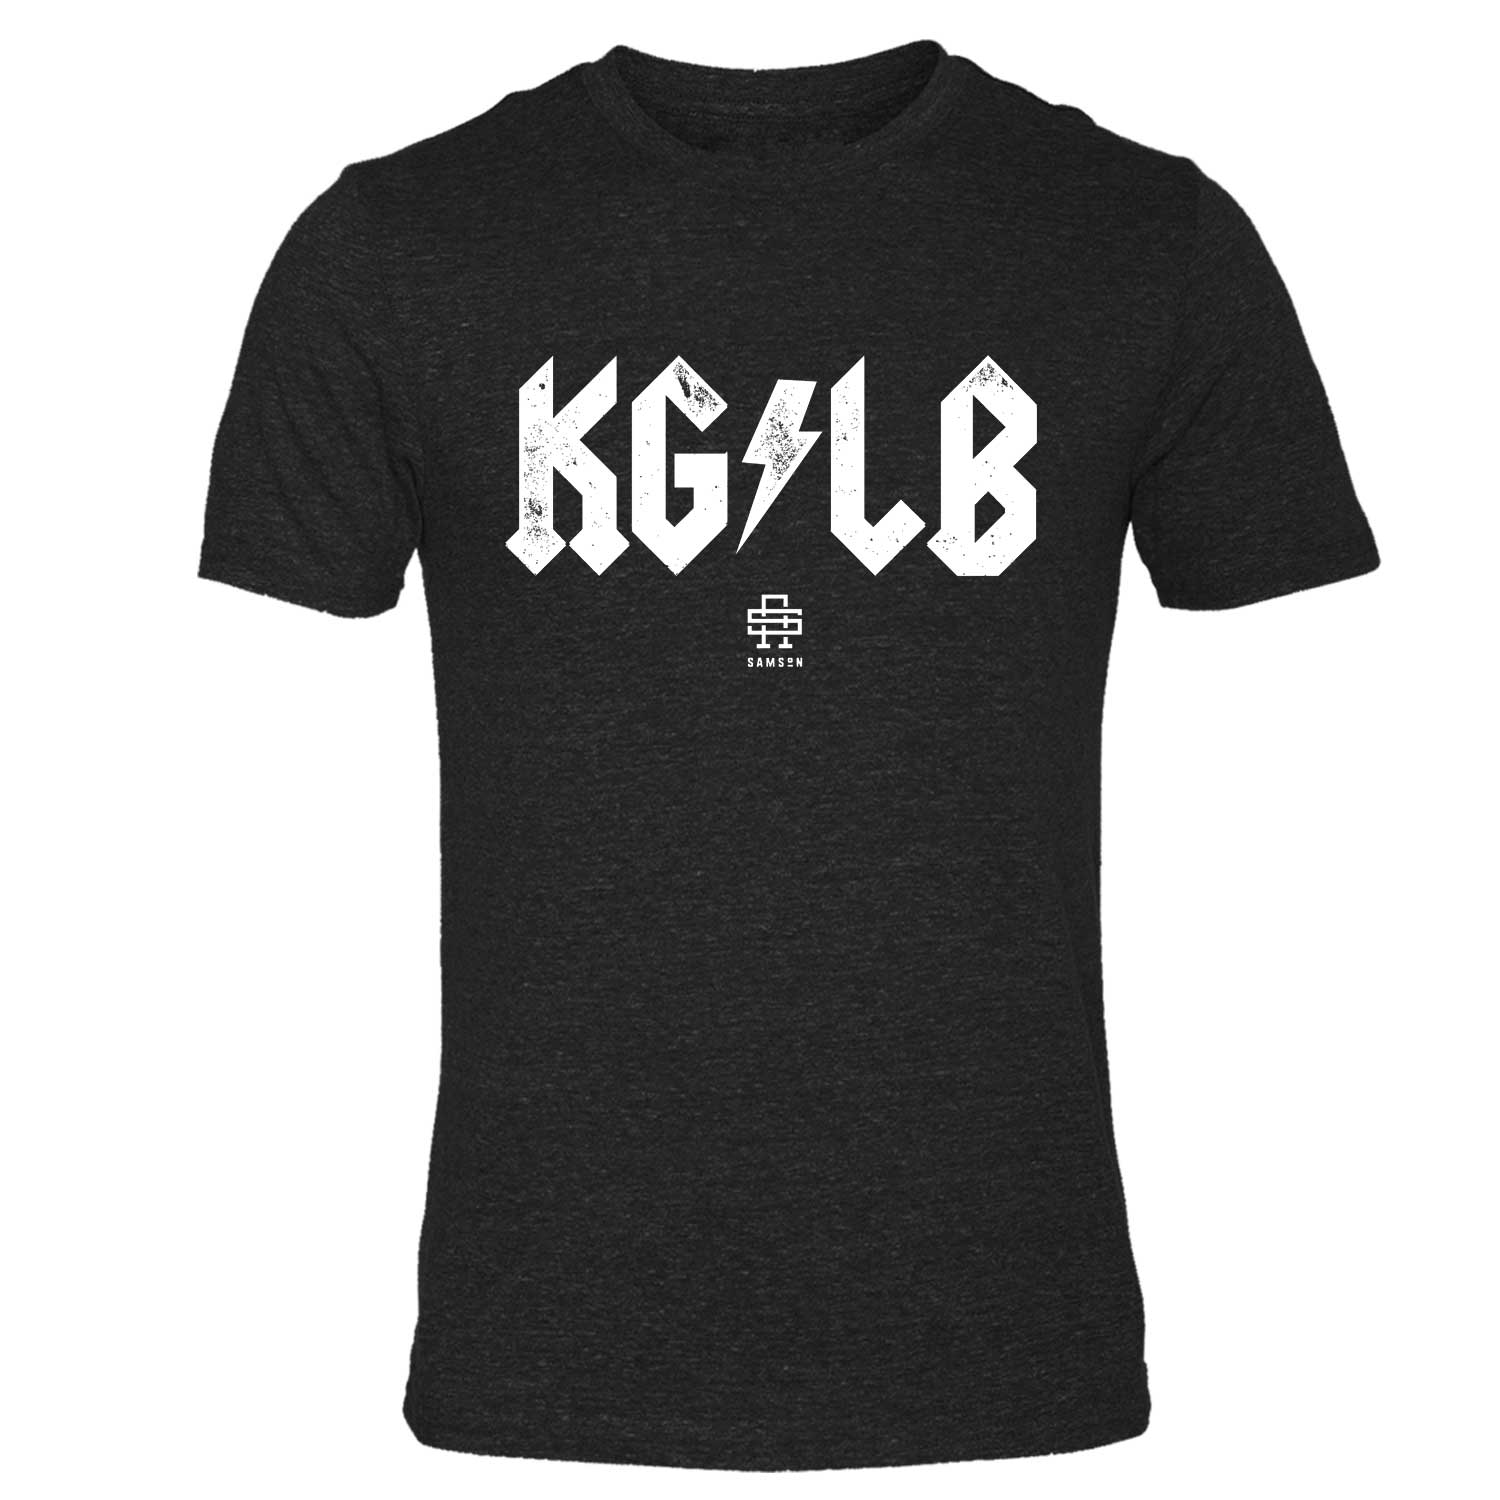 KG/LB Gym T-Shirt